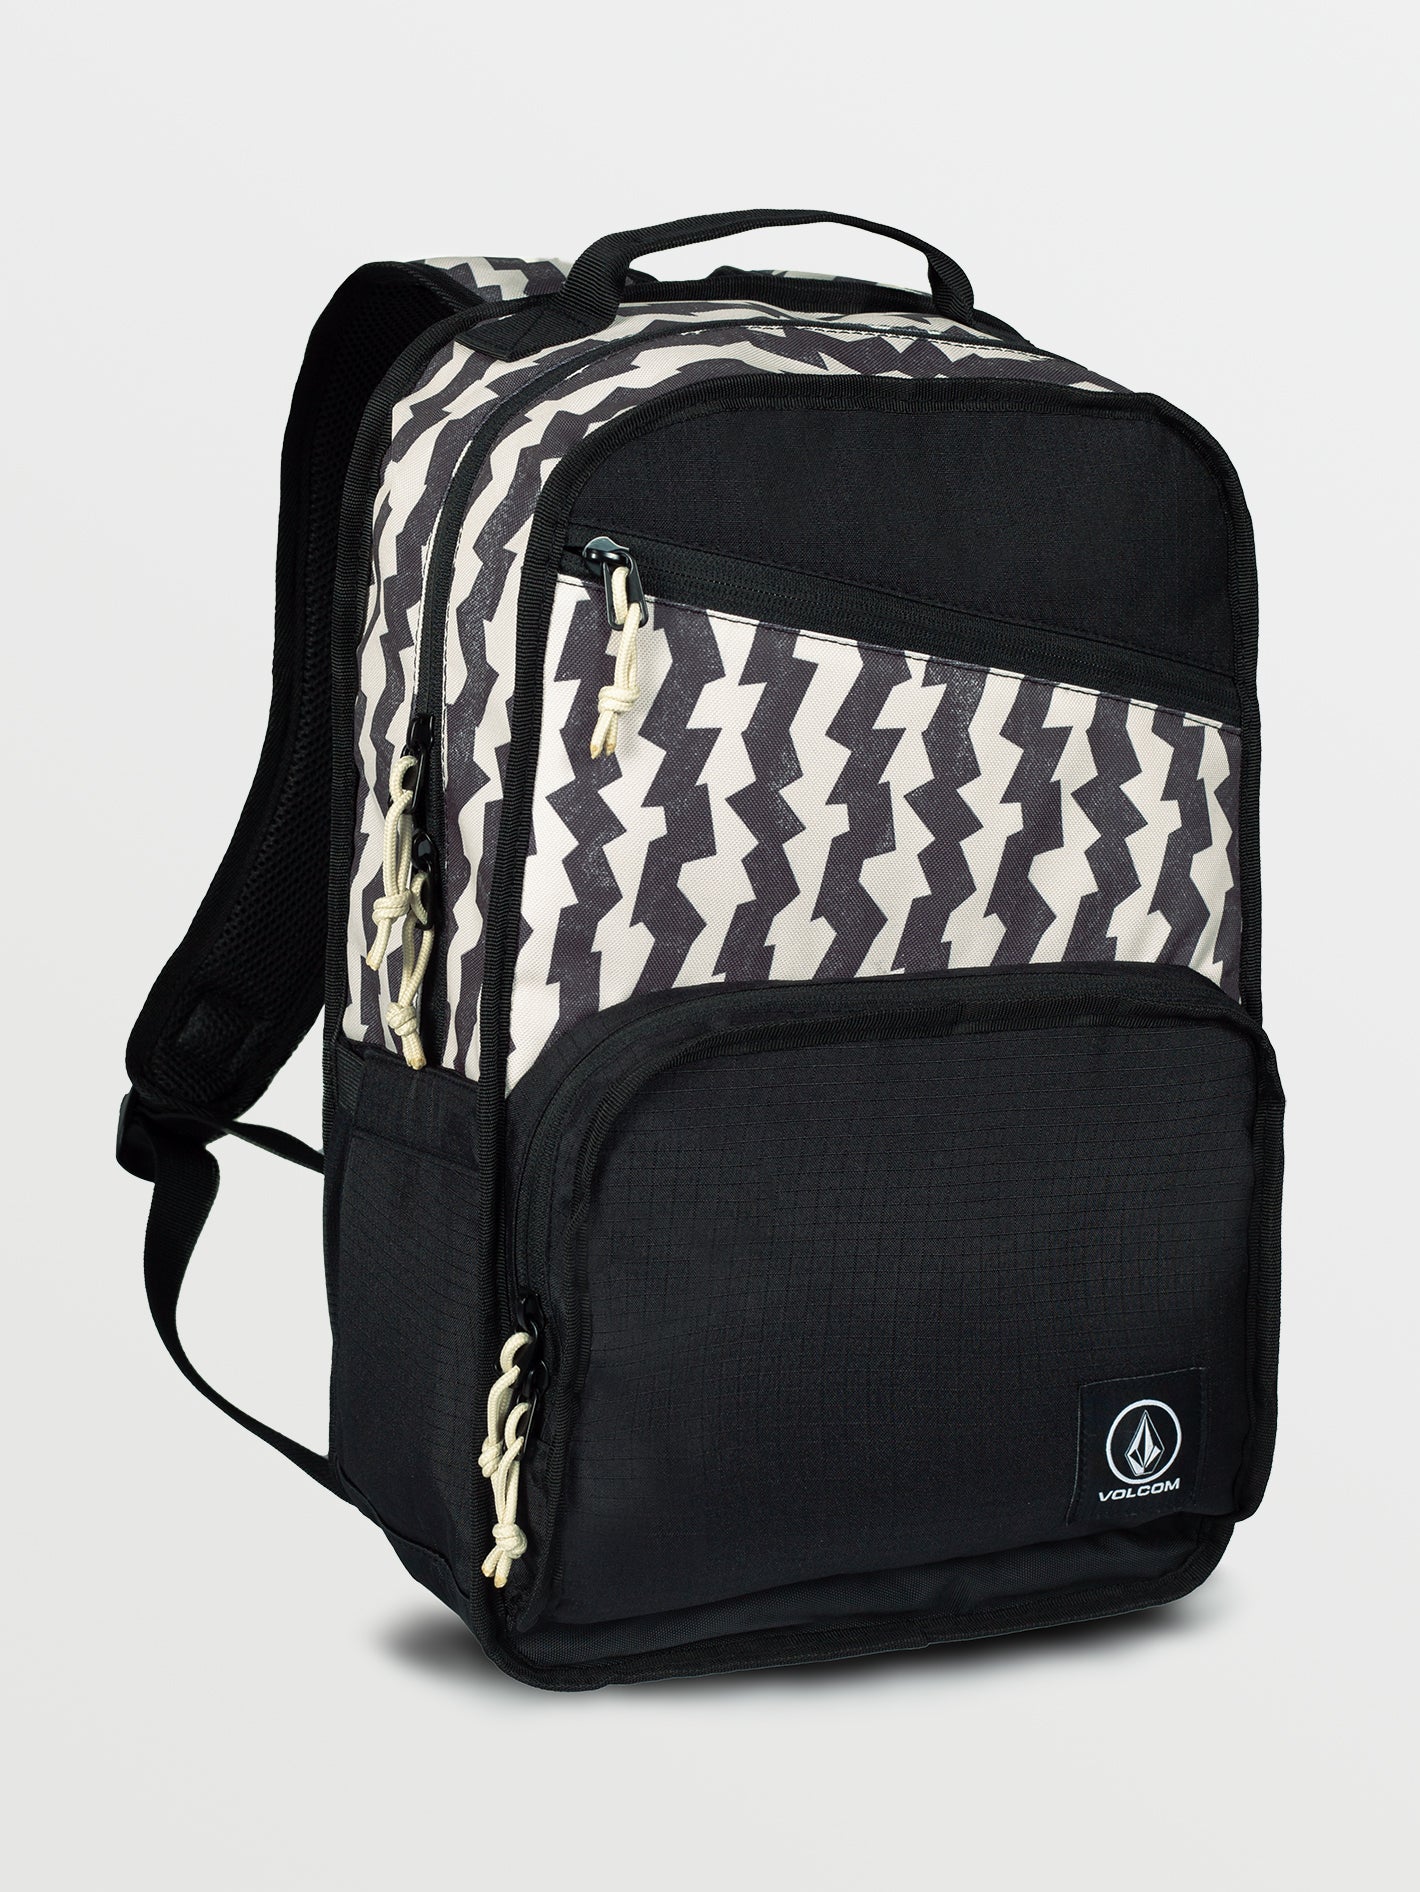 Hardbound Backpack - Black/White – Volcom US